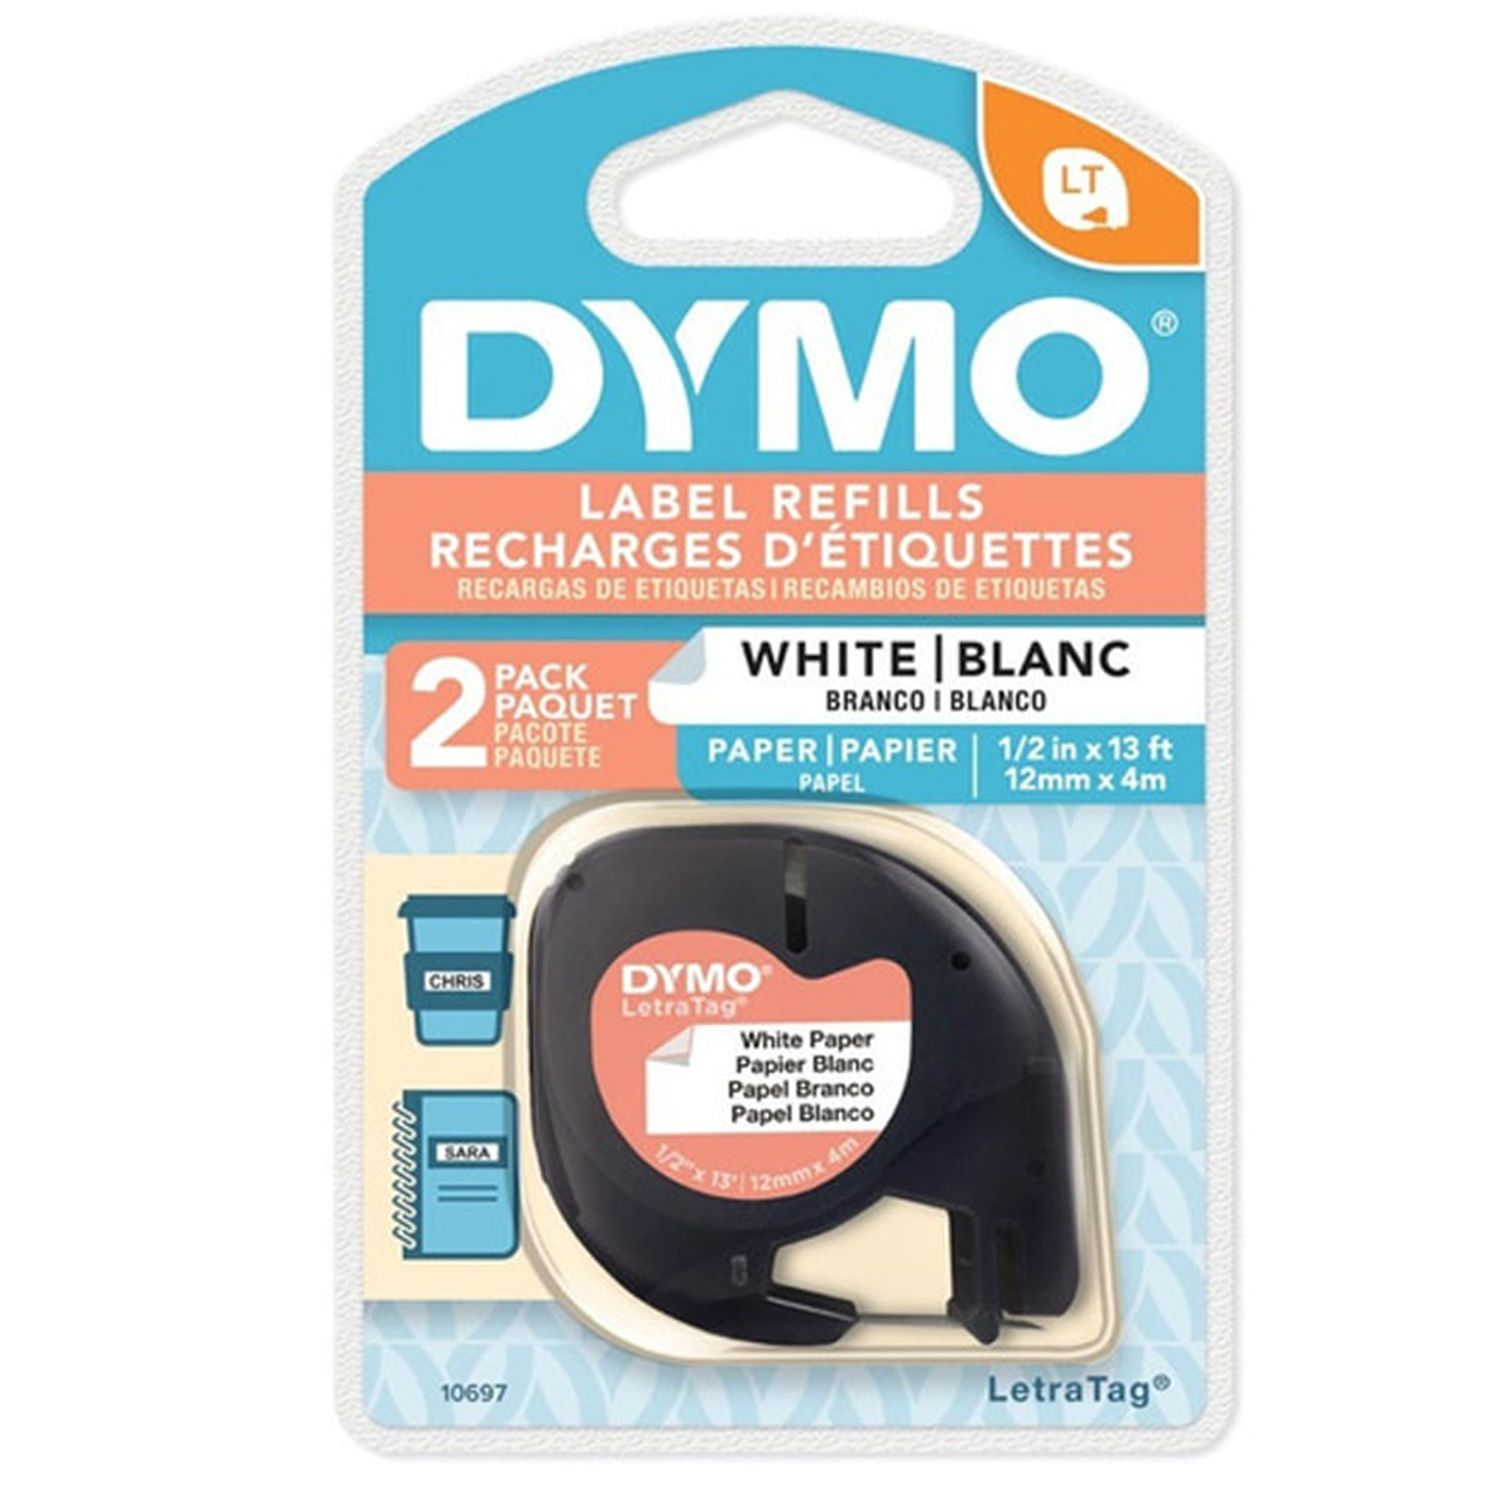 Australia Acercarse De trato fácil Cinta Dymo(x2 unid.) Digital Color Blanco Papel 12mm. x 4m. | Oechsle -  Oechsle